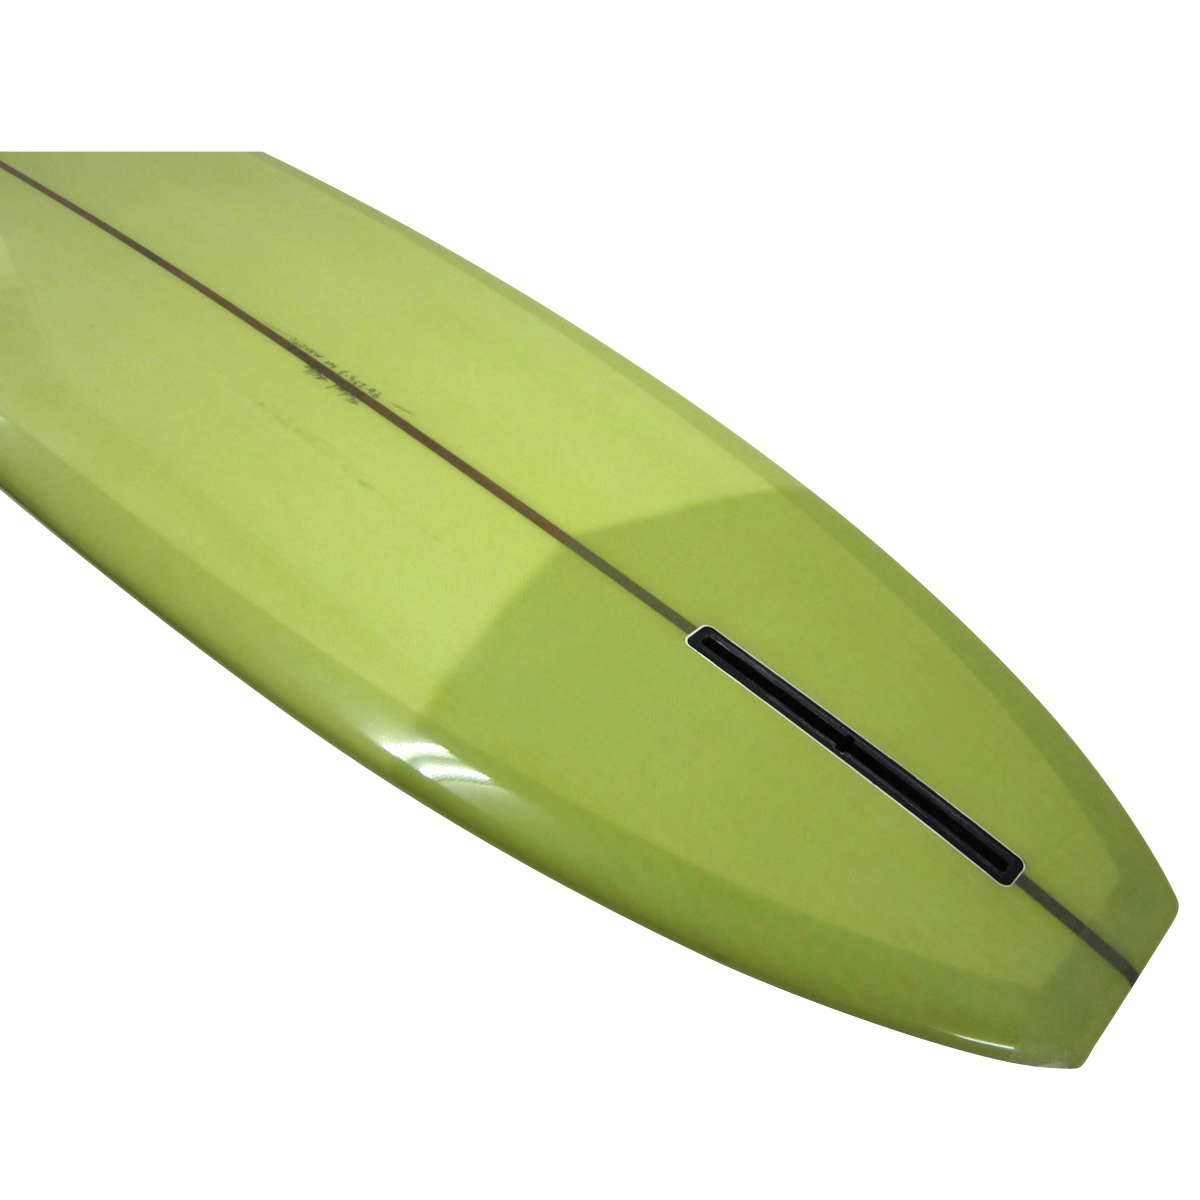 Michael Miller Surfboards / 9`6 Traditional Noserider